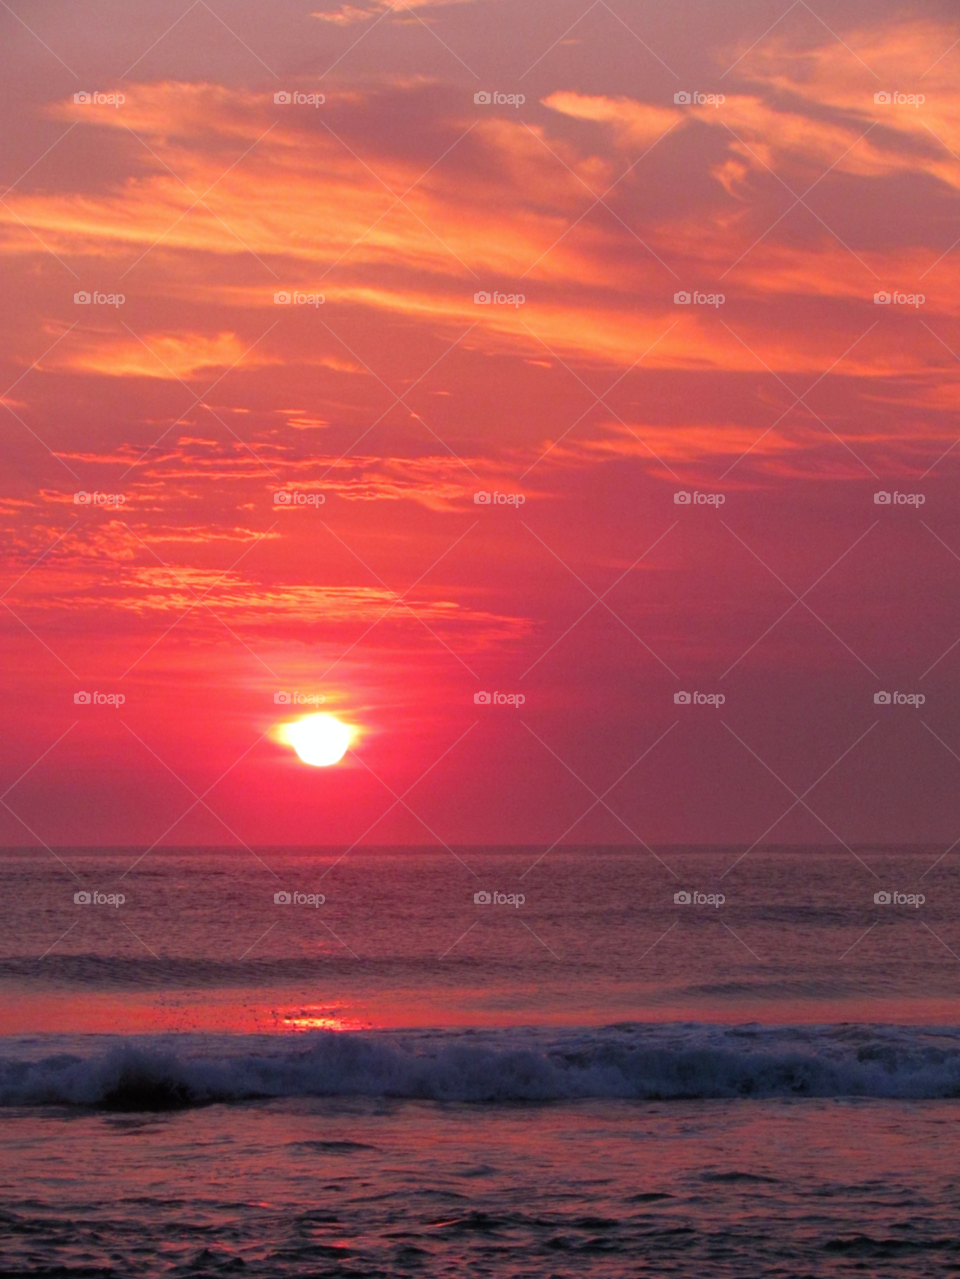 fraser island - australia sun sunrise by luke.twomey85